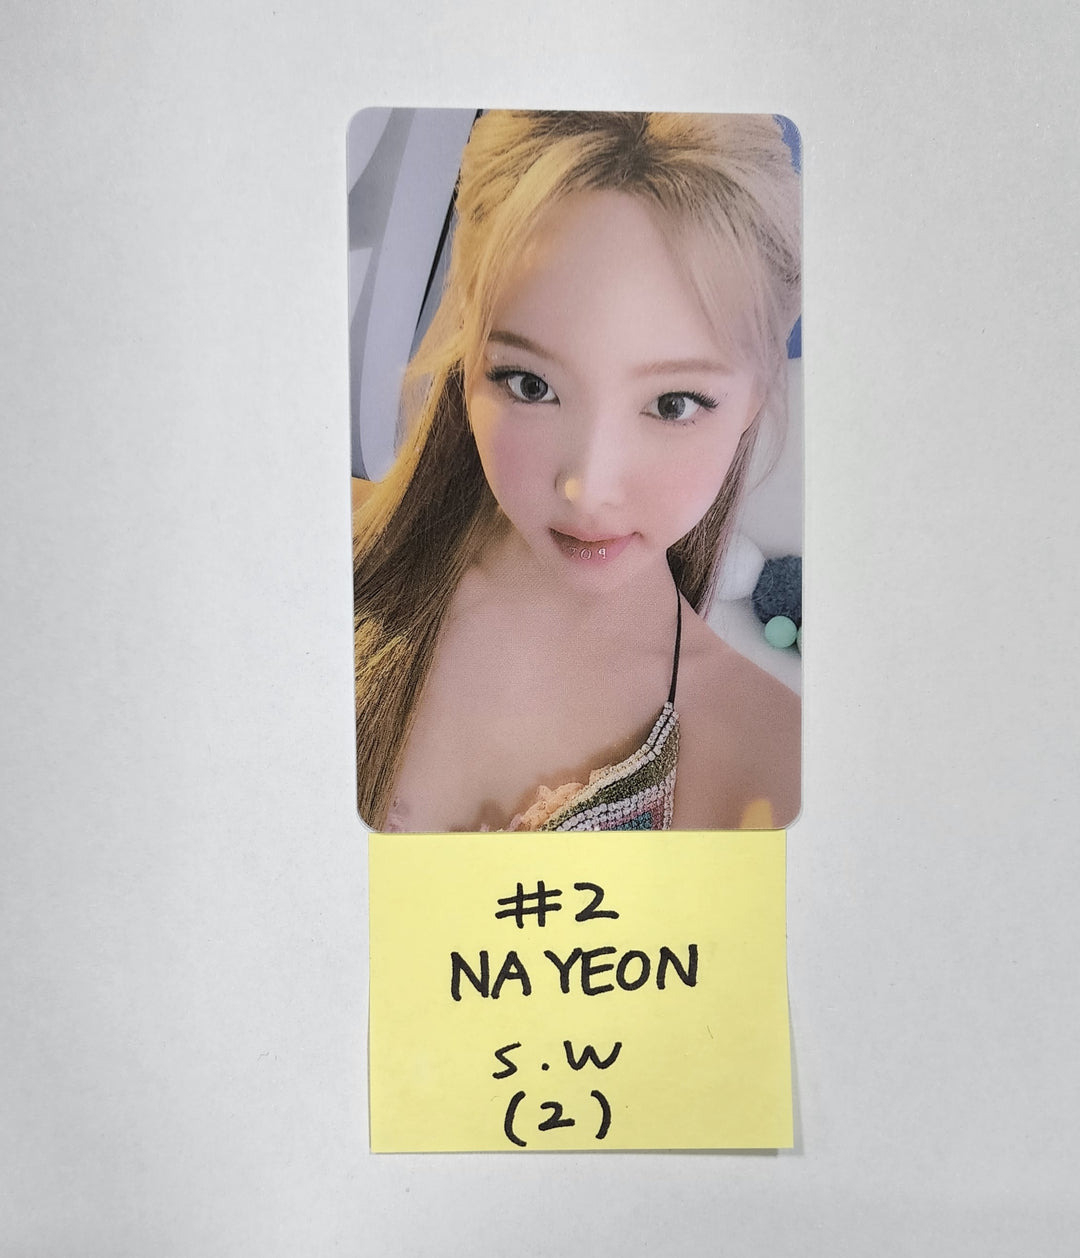 Nayeon "IM NAYEON" - Soundwave Lucky Draw Event Photocard, Postcard